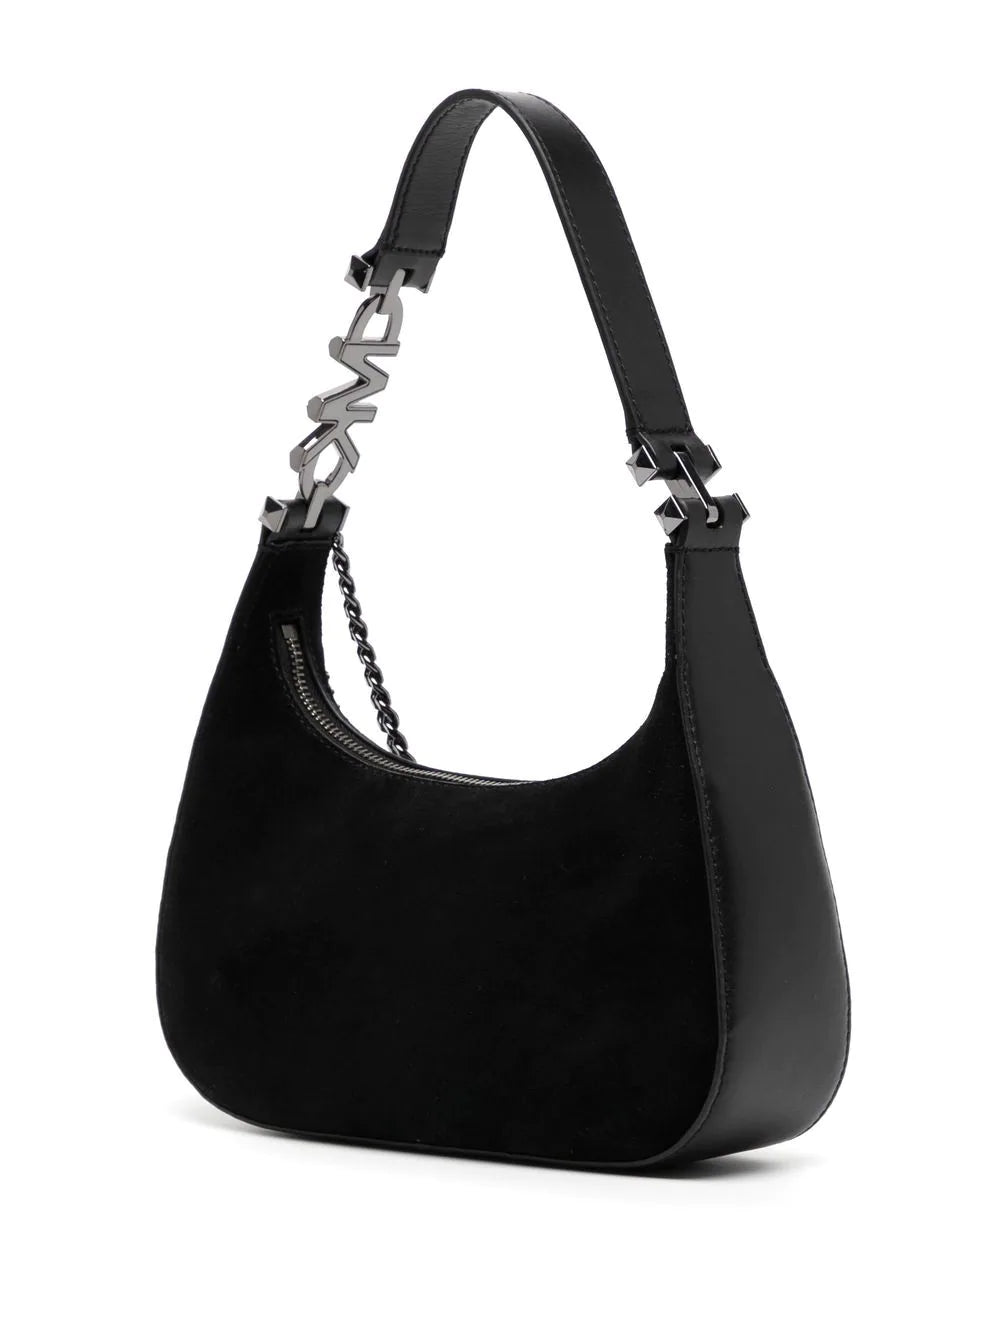 Michael Kors black leather saddle bag purse with... - Depop